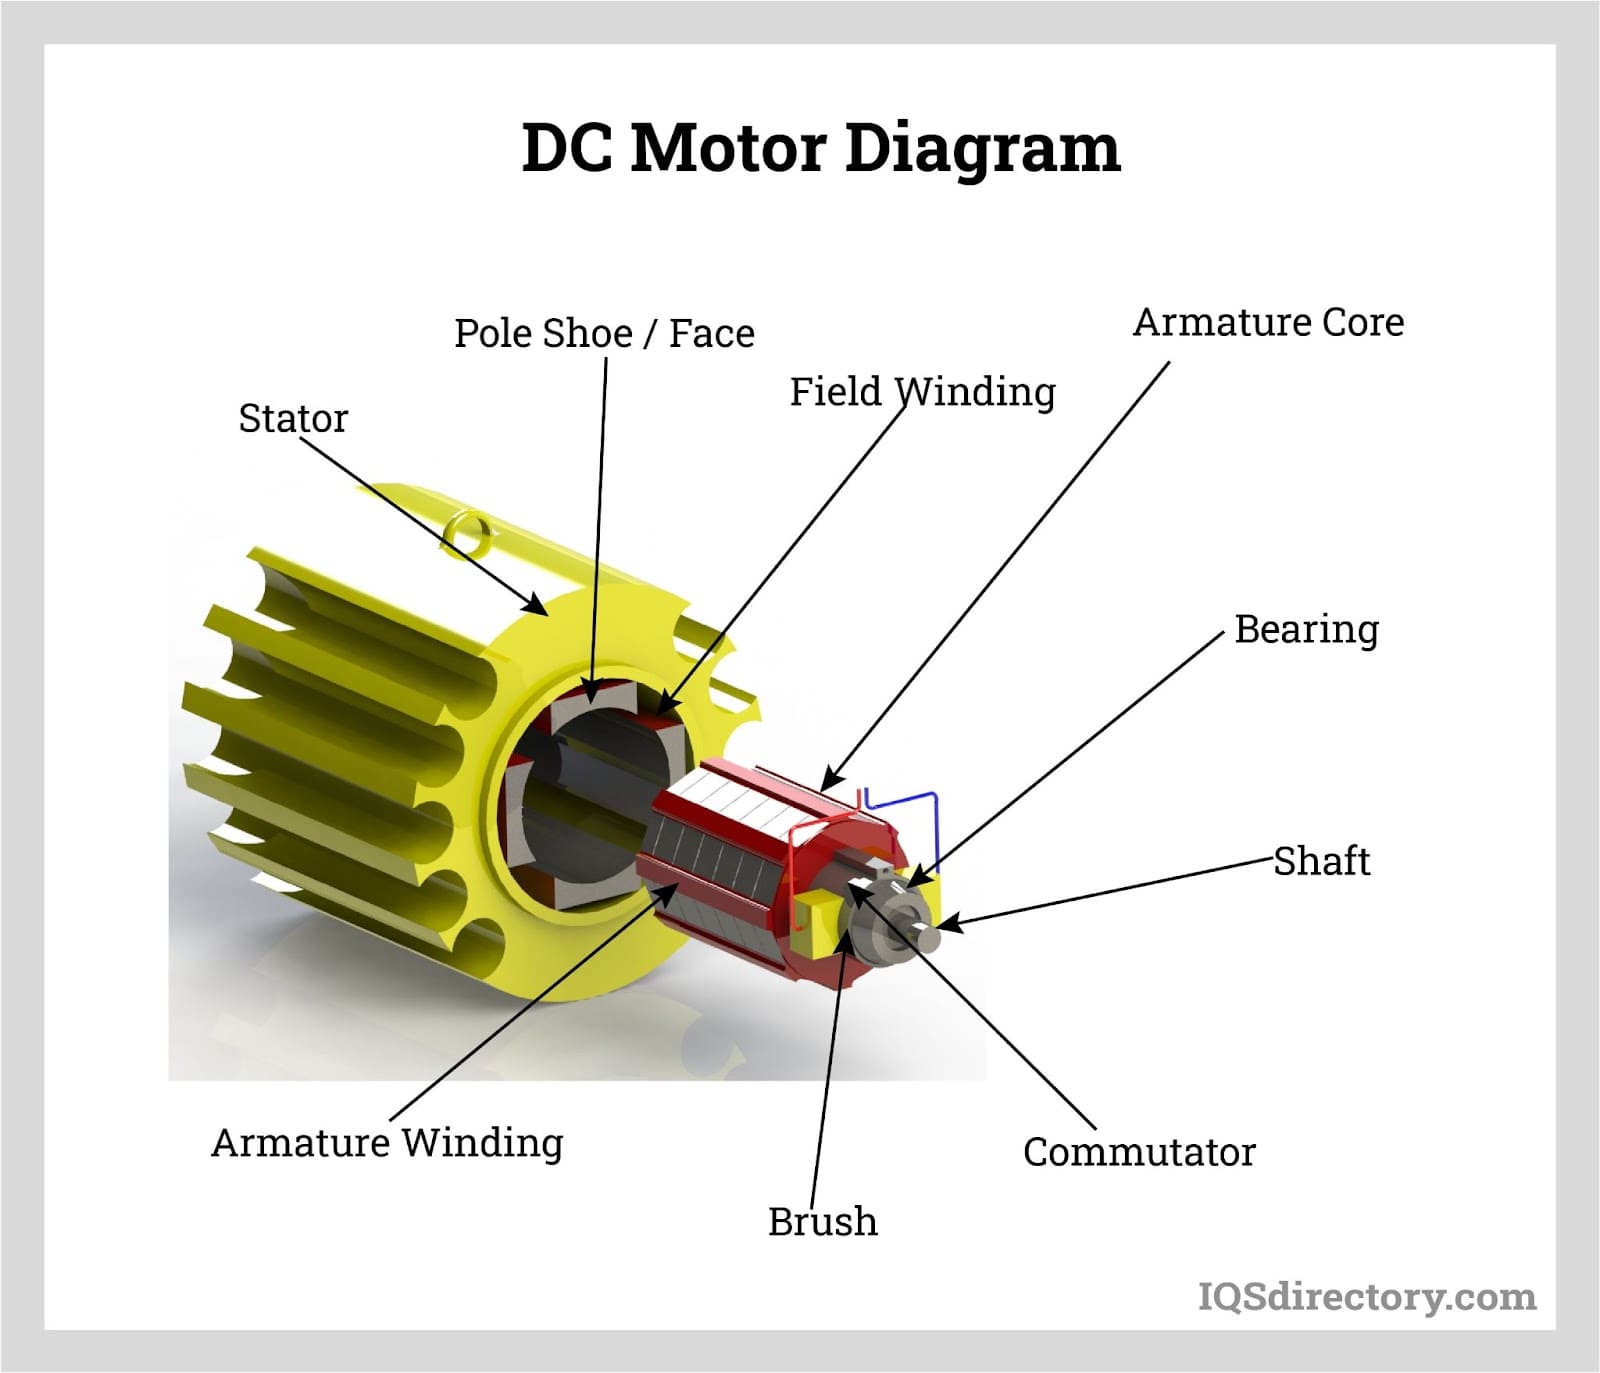 A Brief History of DC Motors - Motor Specialty Inc.